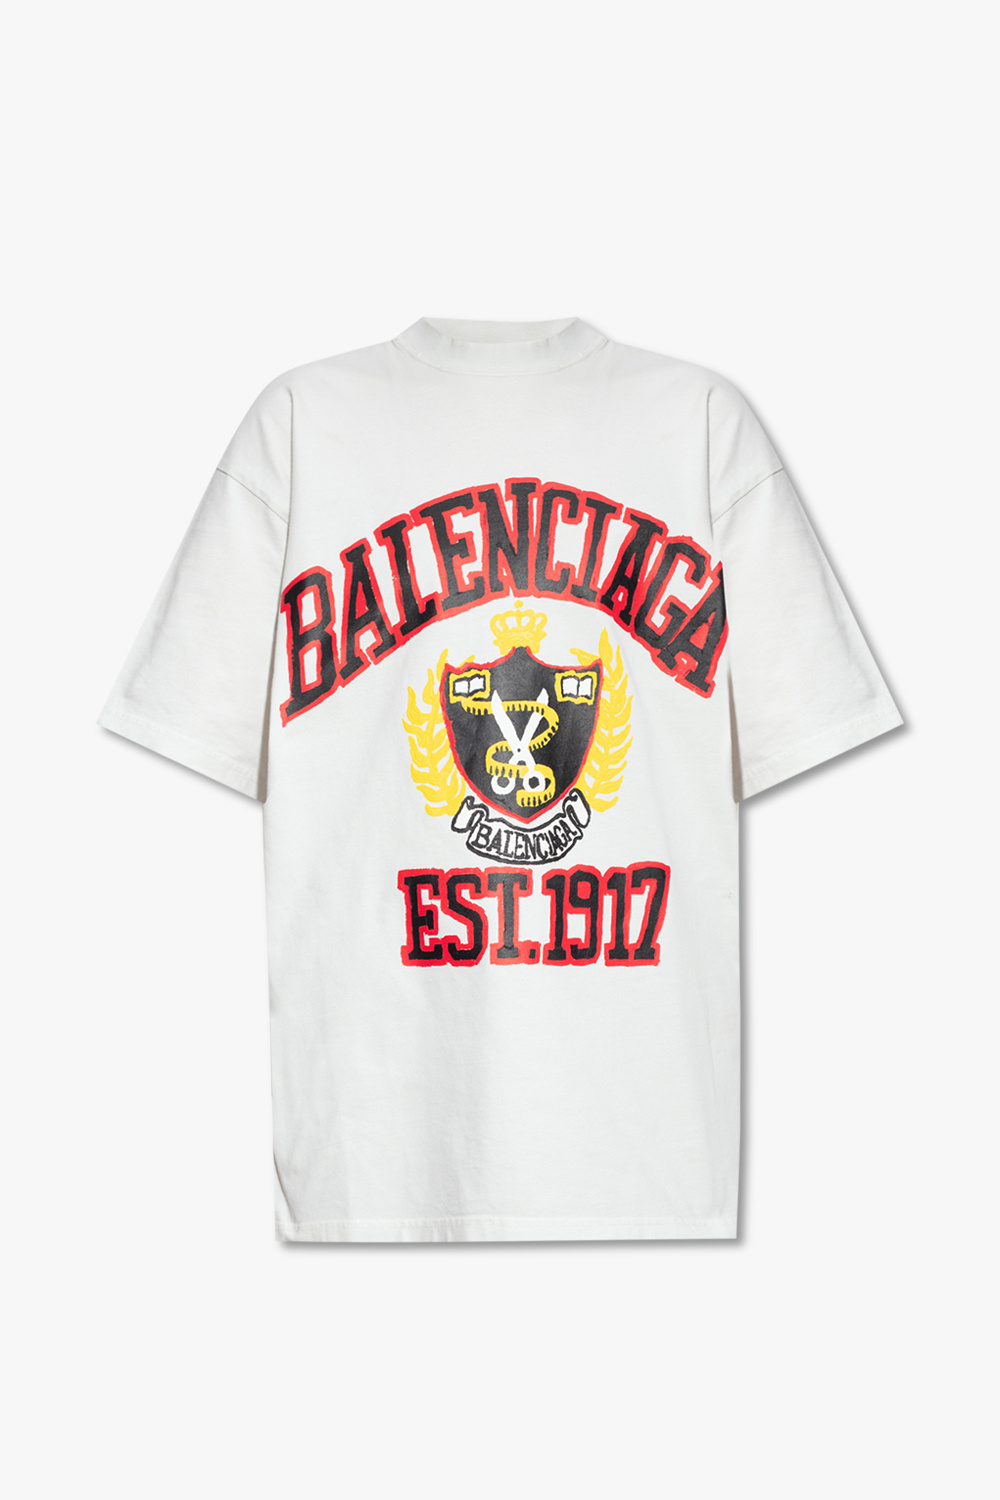 BALENCIAGA cotton tshirt with Political Campaign logo  Black  Balenciaga  tshirt 681864TMVE7 online on GIGLIOCOM